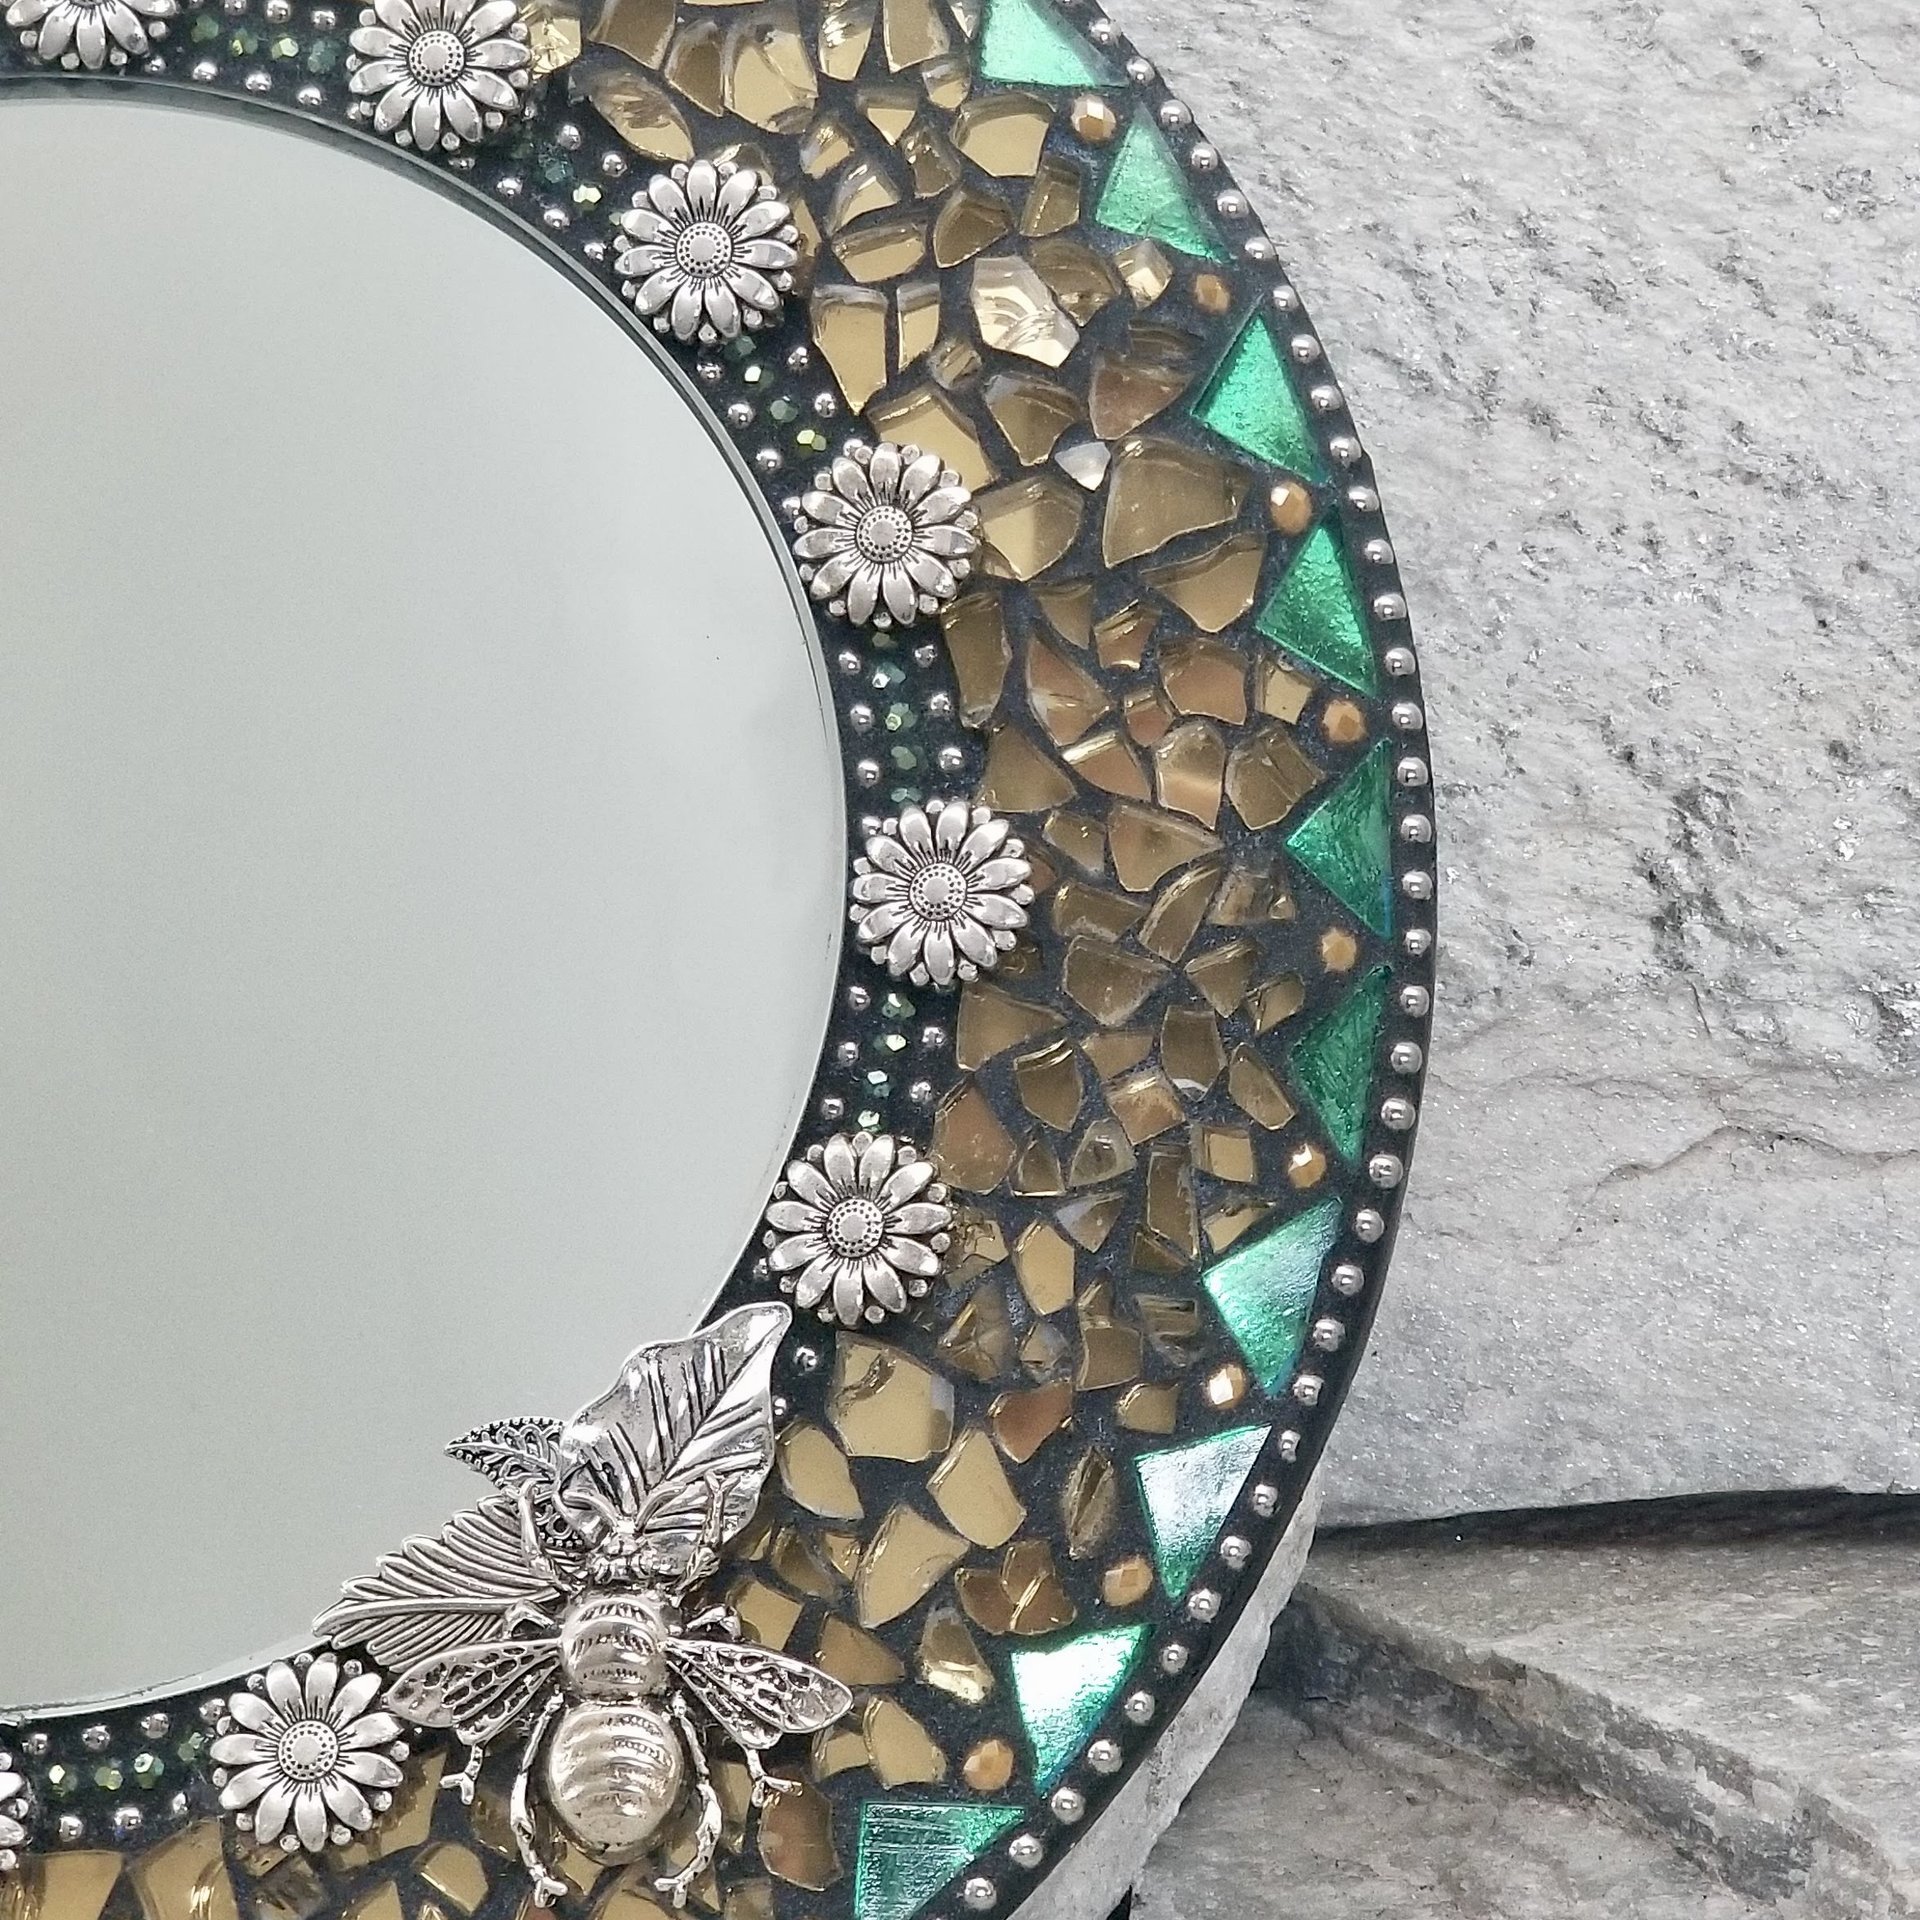 Bee and Sunflower Mosaic Gold Mirror, Round Mosaic Mirror, Home Decor